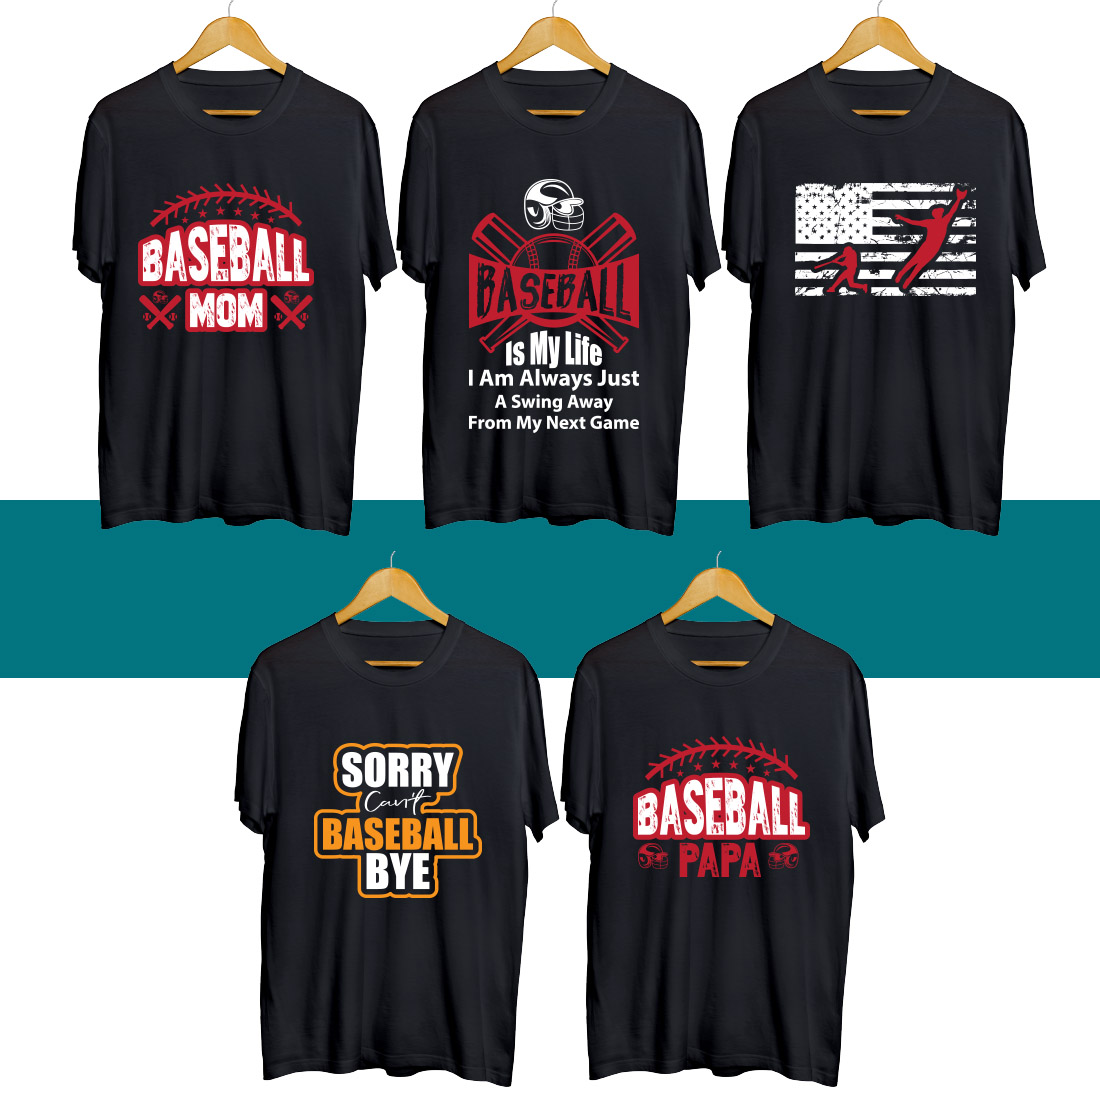 Baseball t-shirt design bundle - Buy t-shirt designs